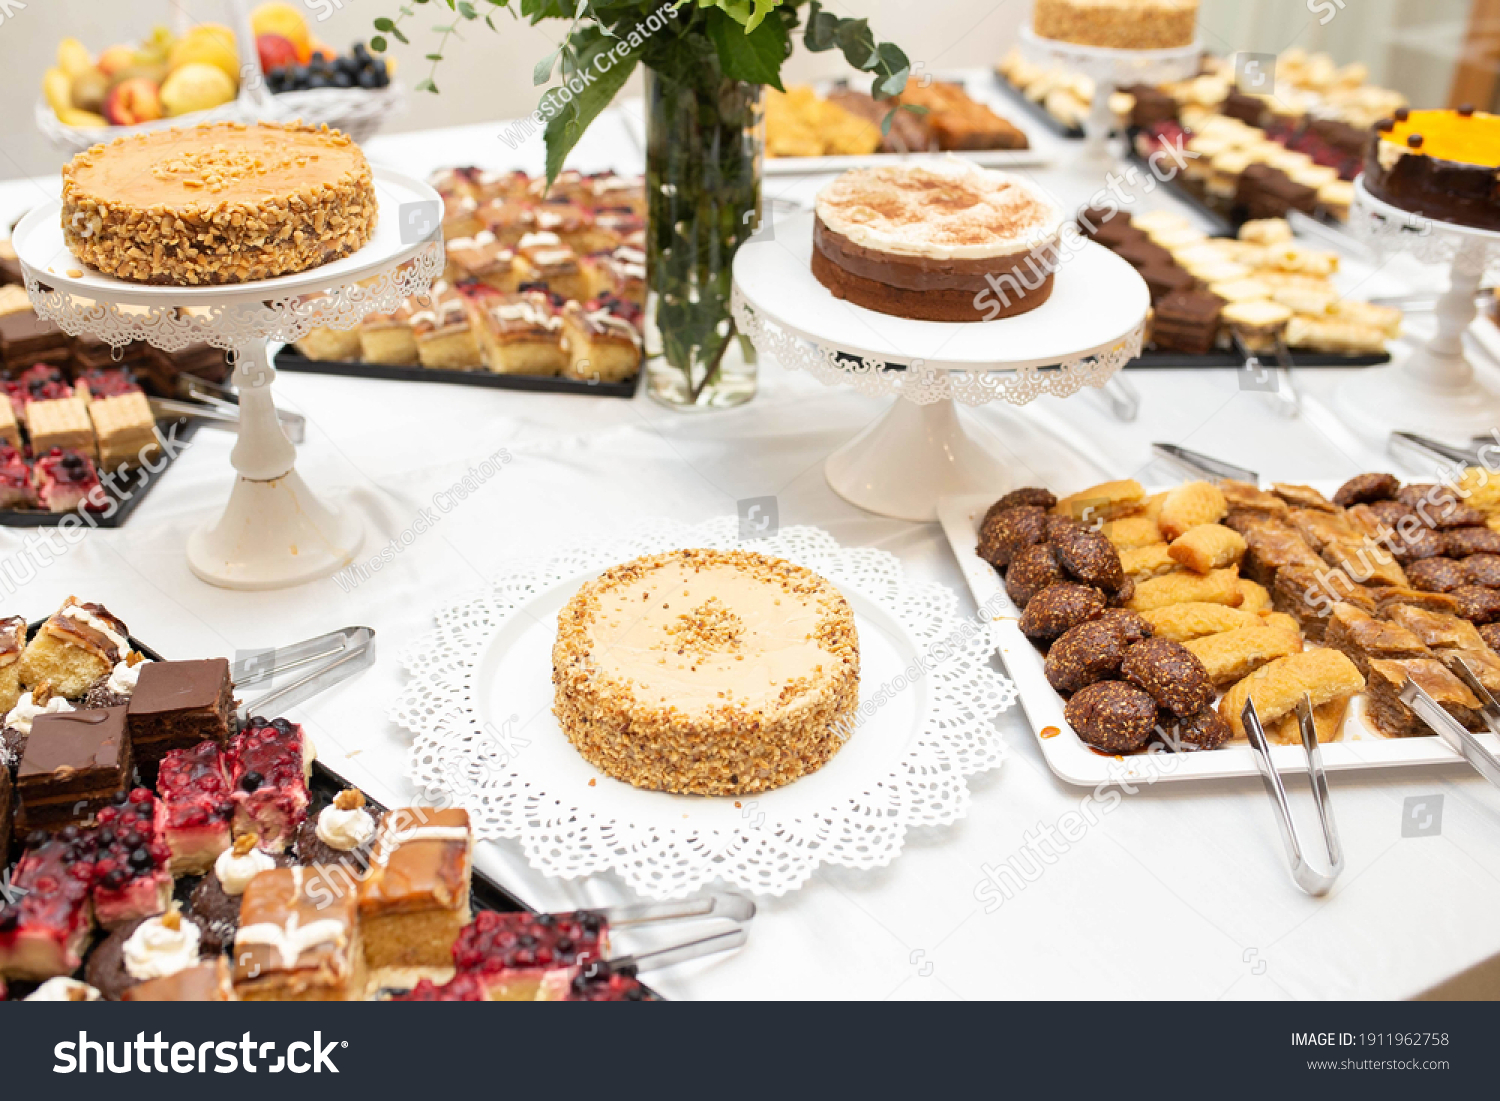 51,113 Dessert banquet Images, Stock Photos & Vectors | Shutterstock